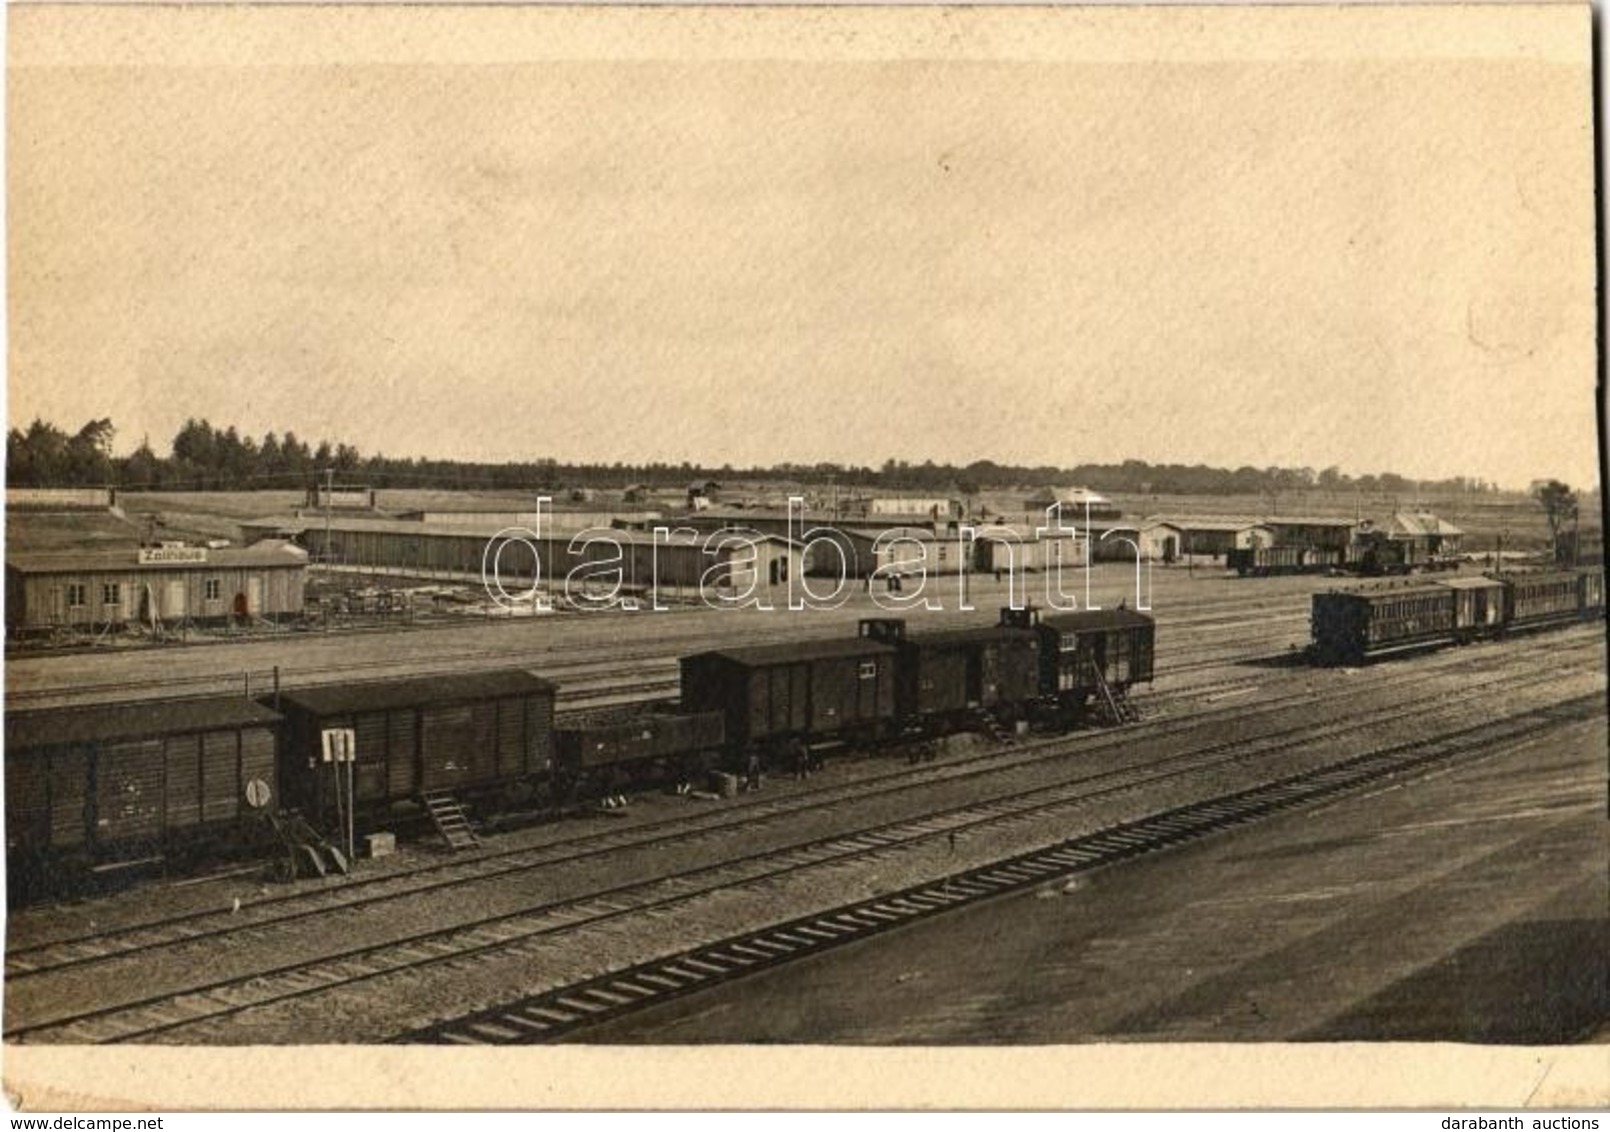 * T2 1916 Pozerunai, Poscherun; Bahnhof, Zollhaus / Railway Station And Trains, Customs House. Photo - Zonder Classificatie